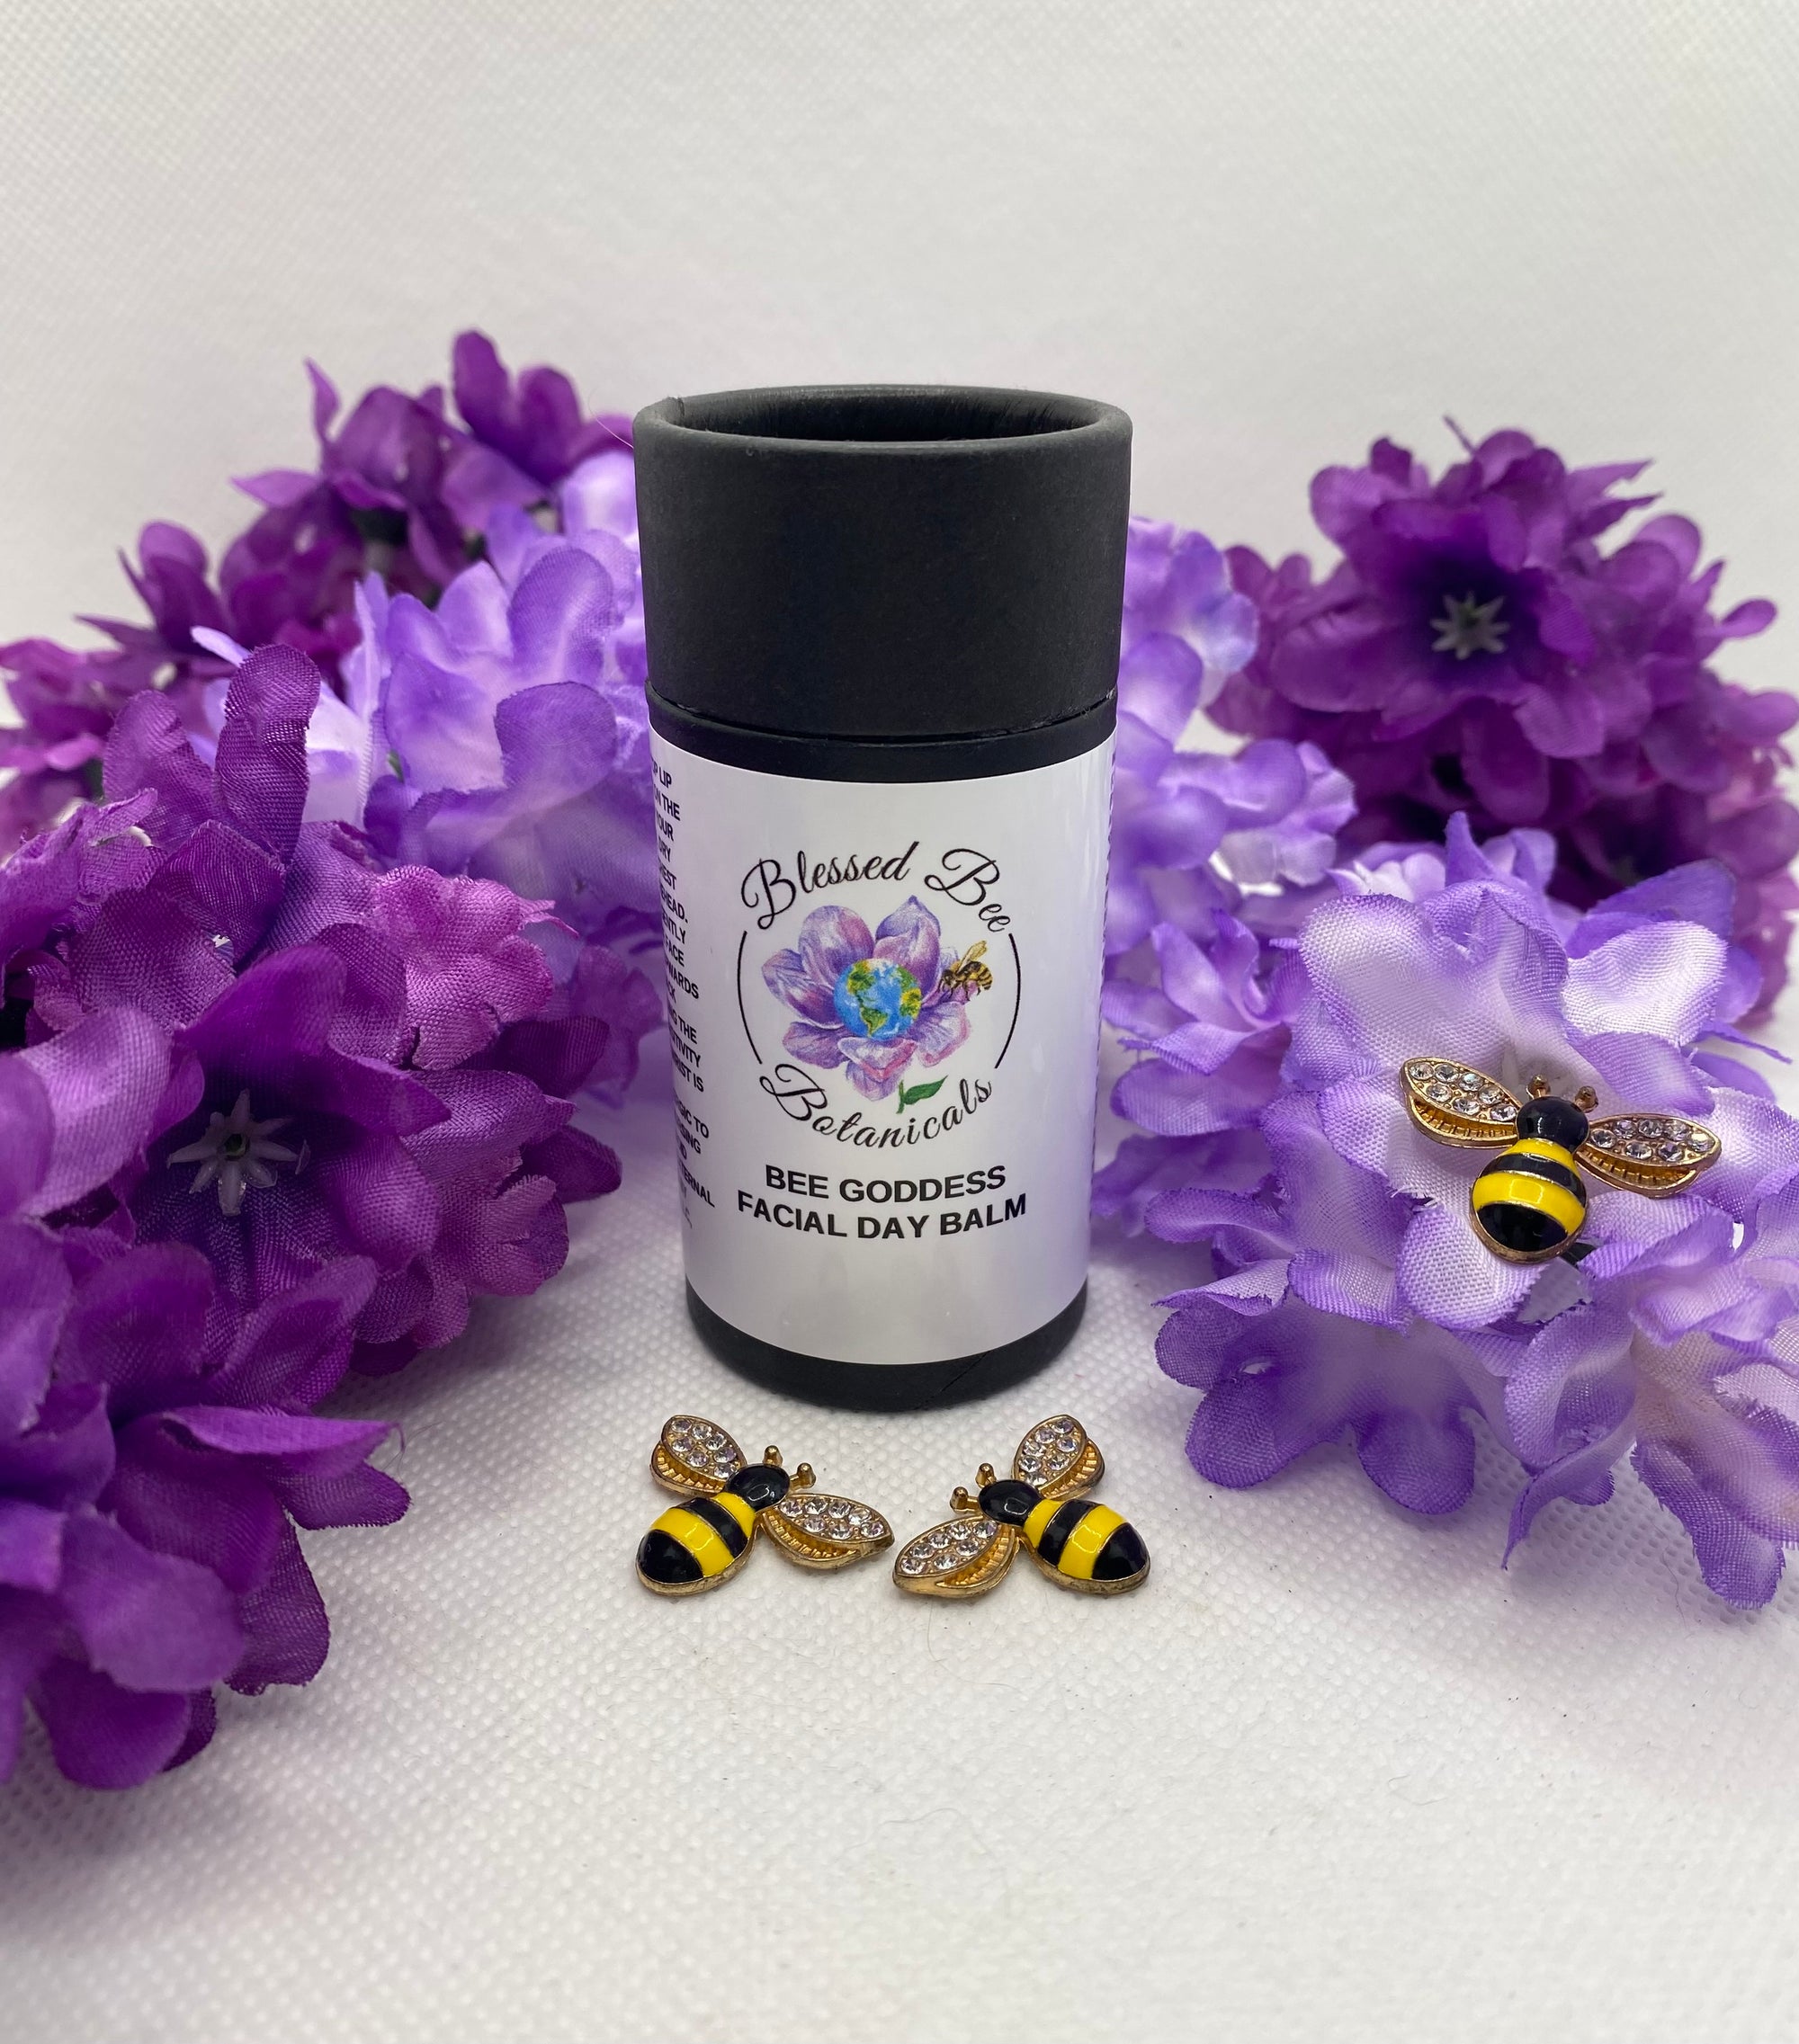 Bee Goddess Facial Day Balm | Organic Moisturizing Beeswax Balm